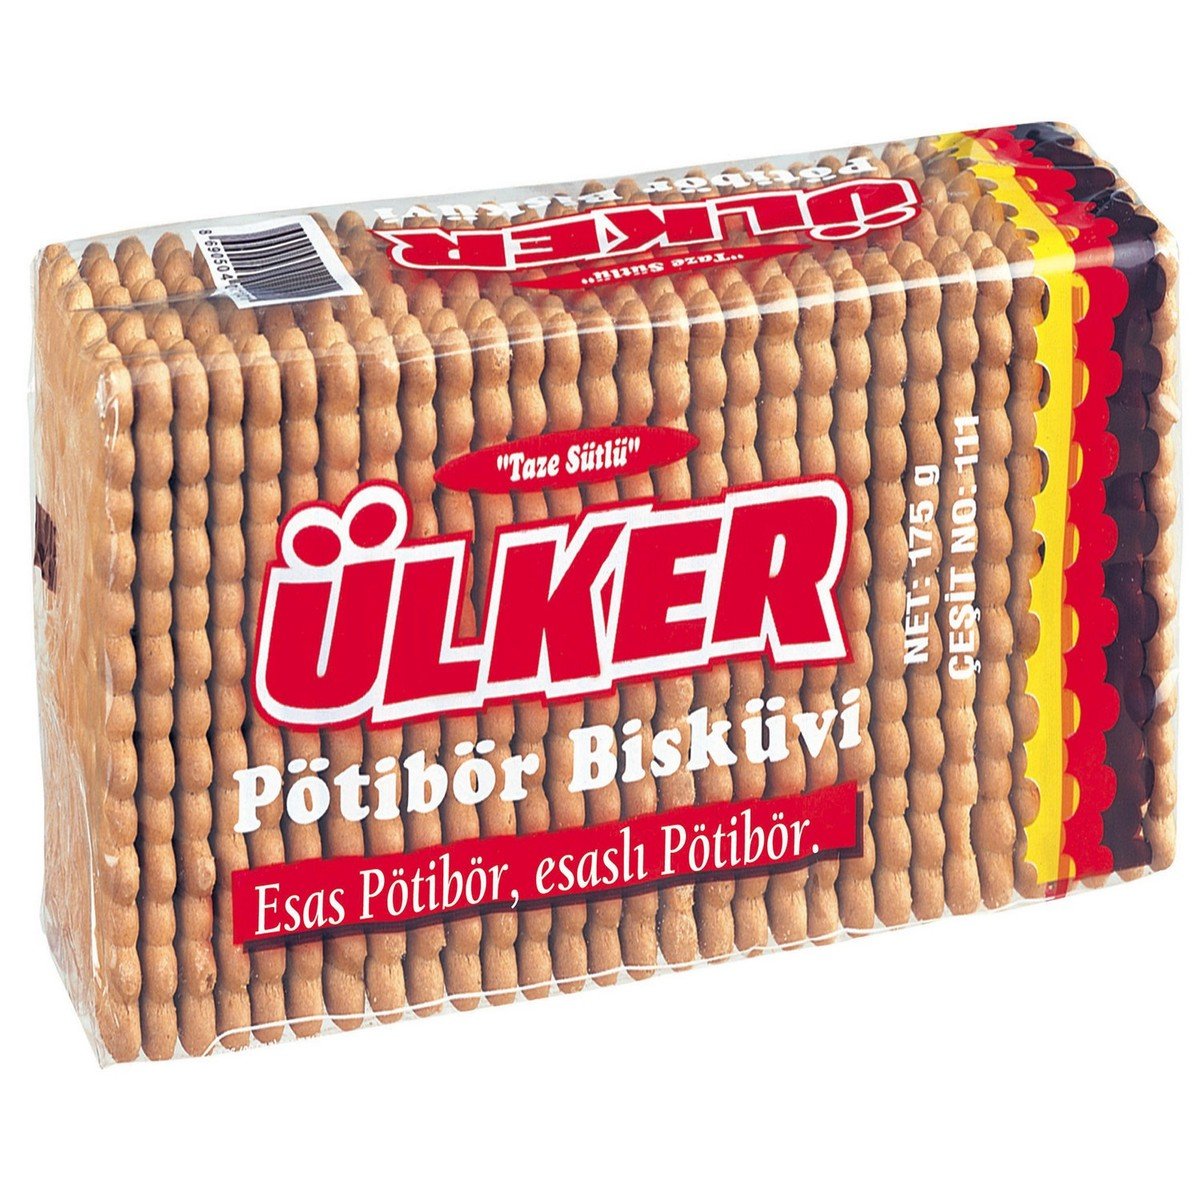 Ulker Petit Beurre Biscuits 175g